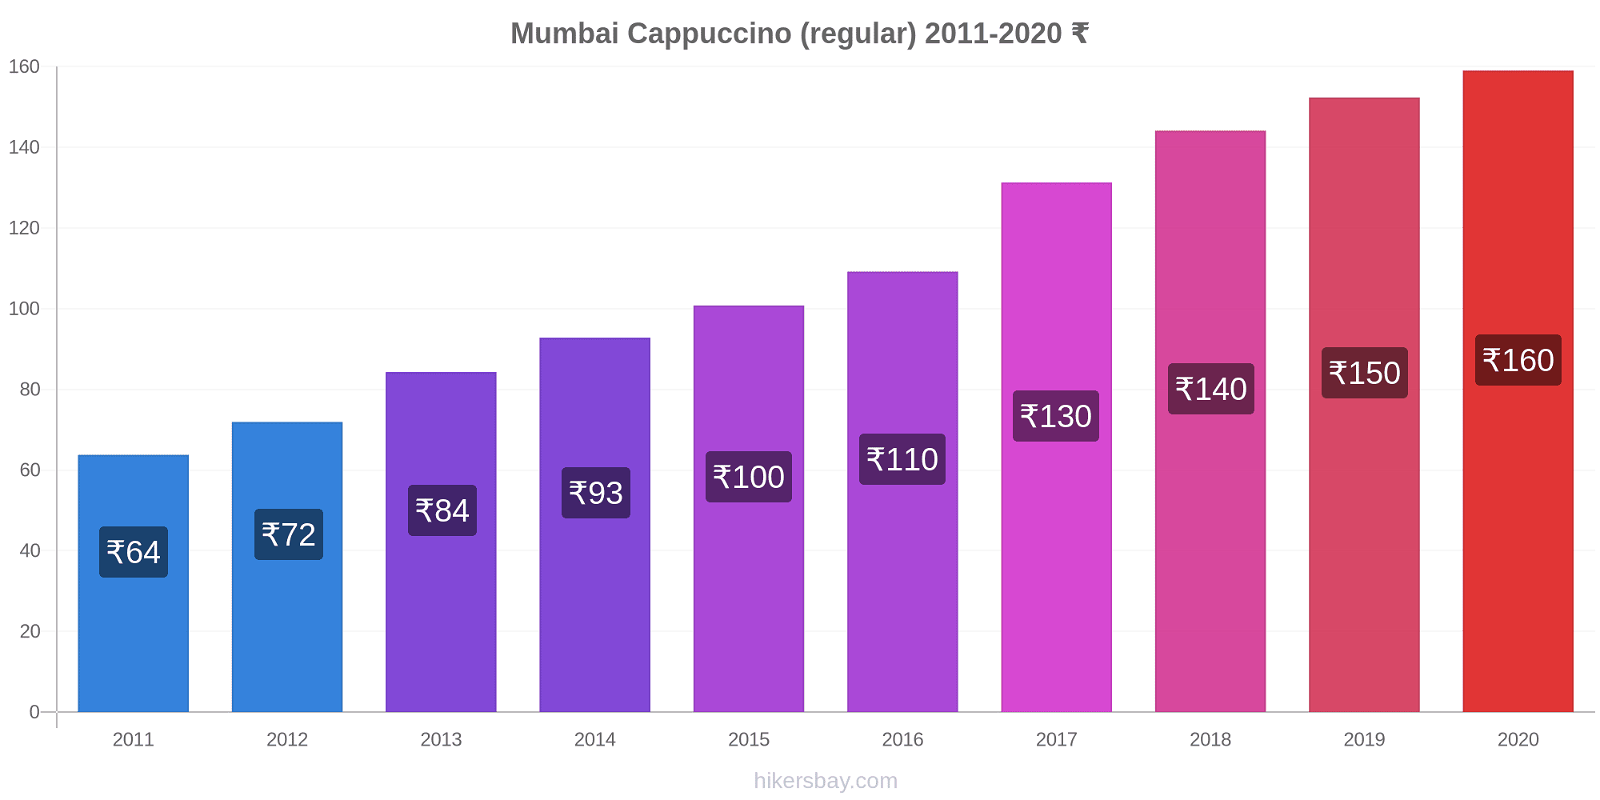 Mumbai price changes Cappuccino (regular) hikersbay.com